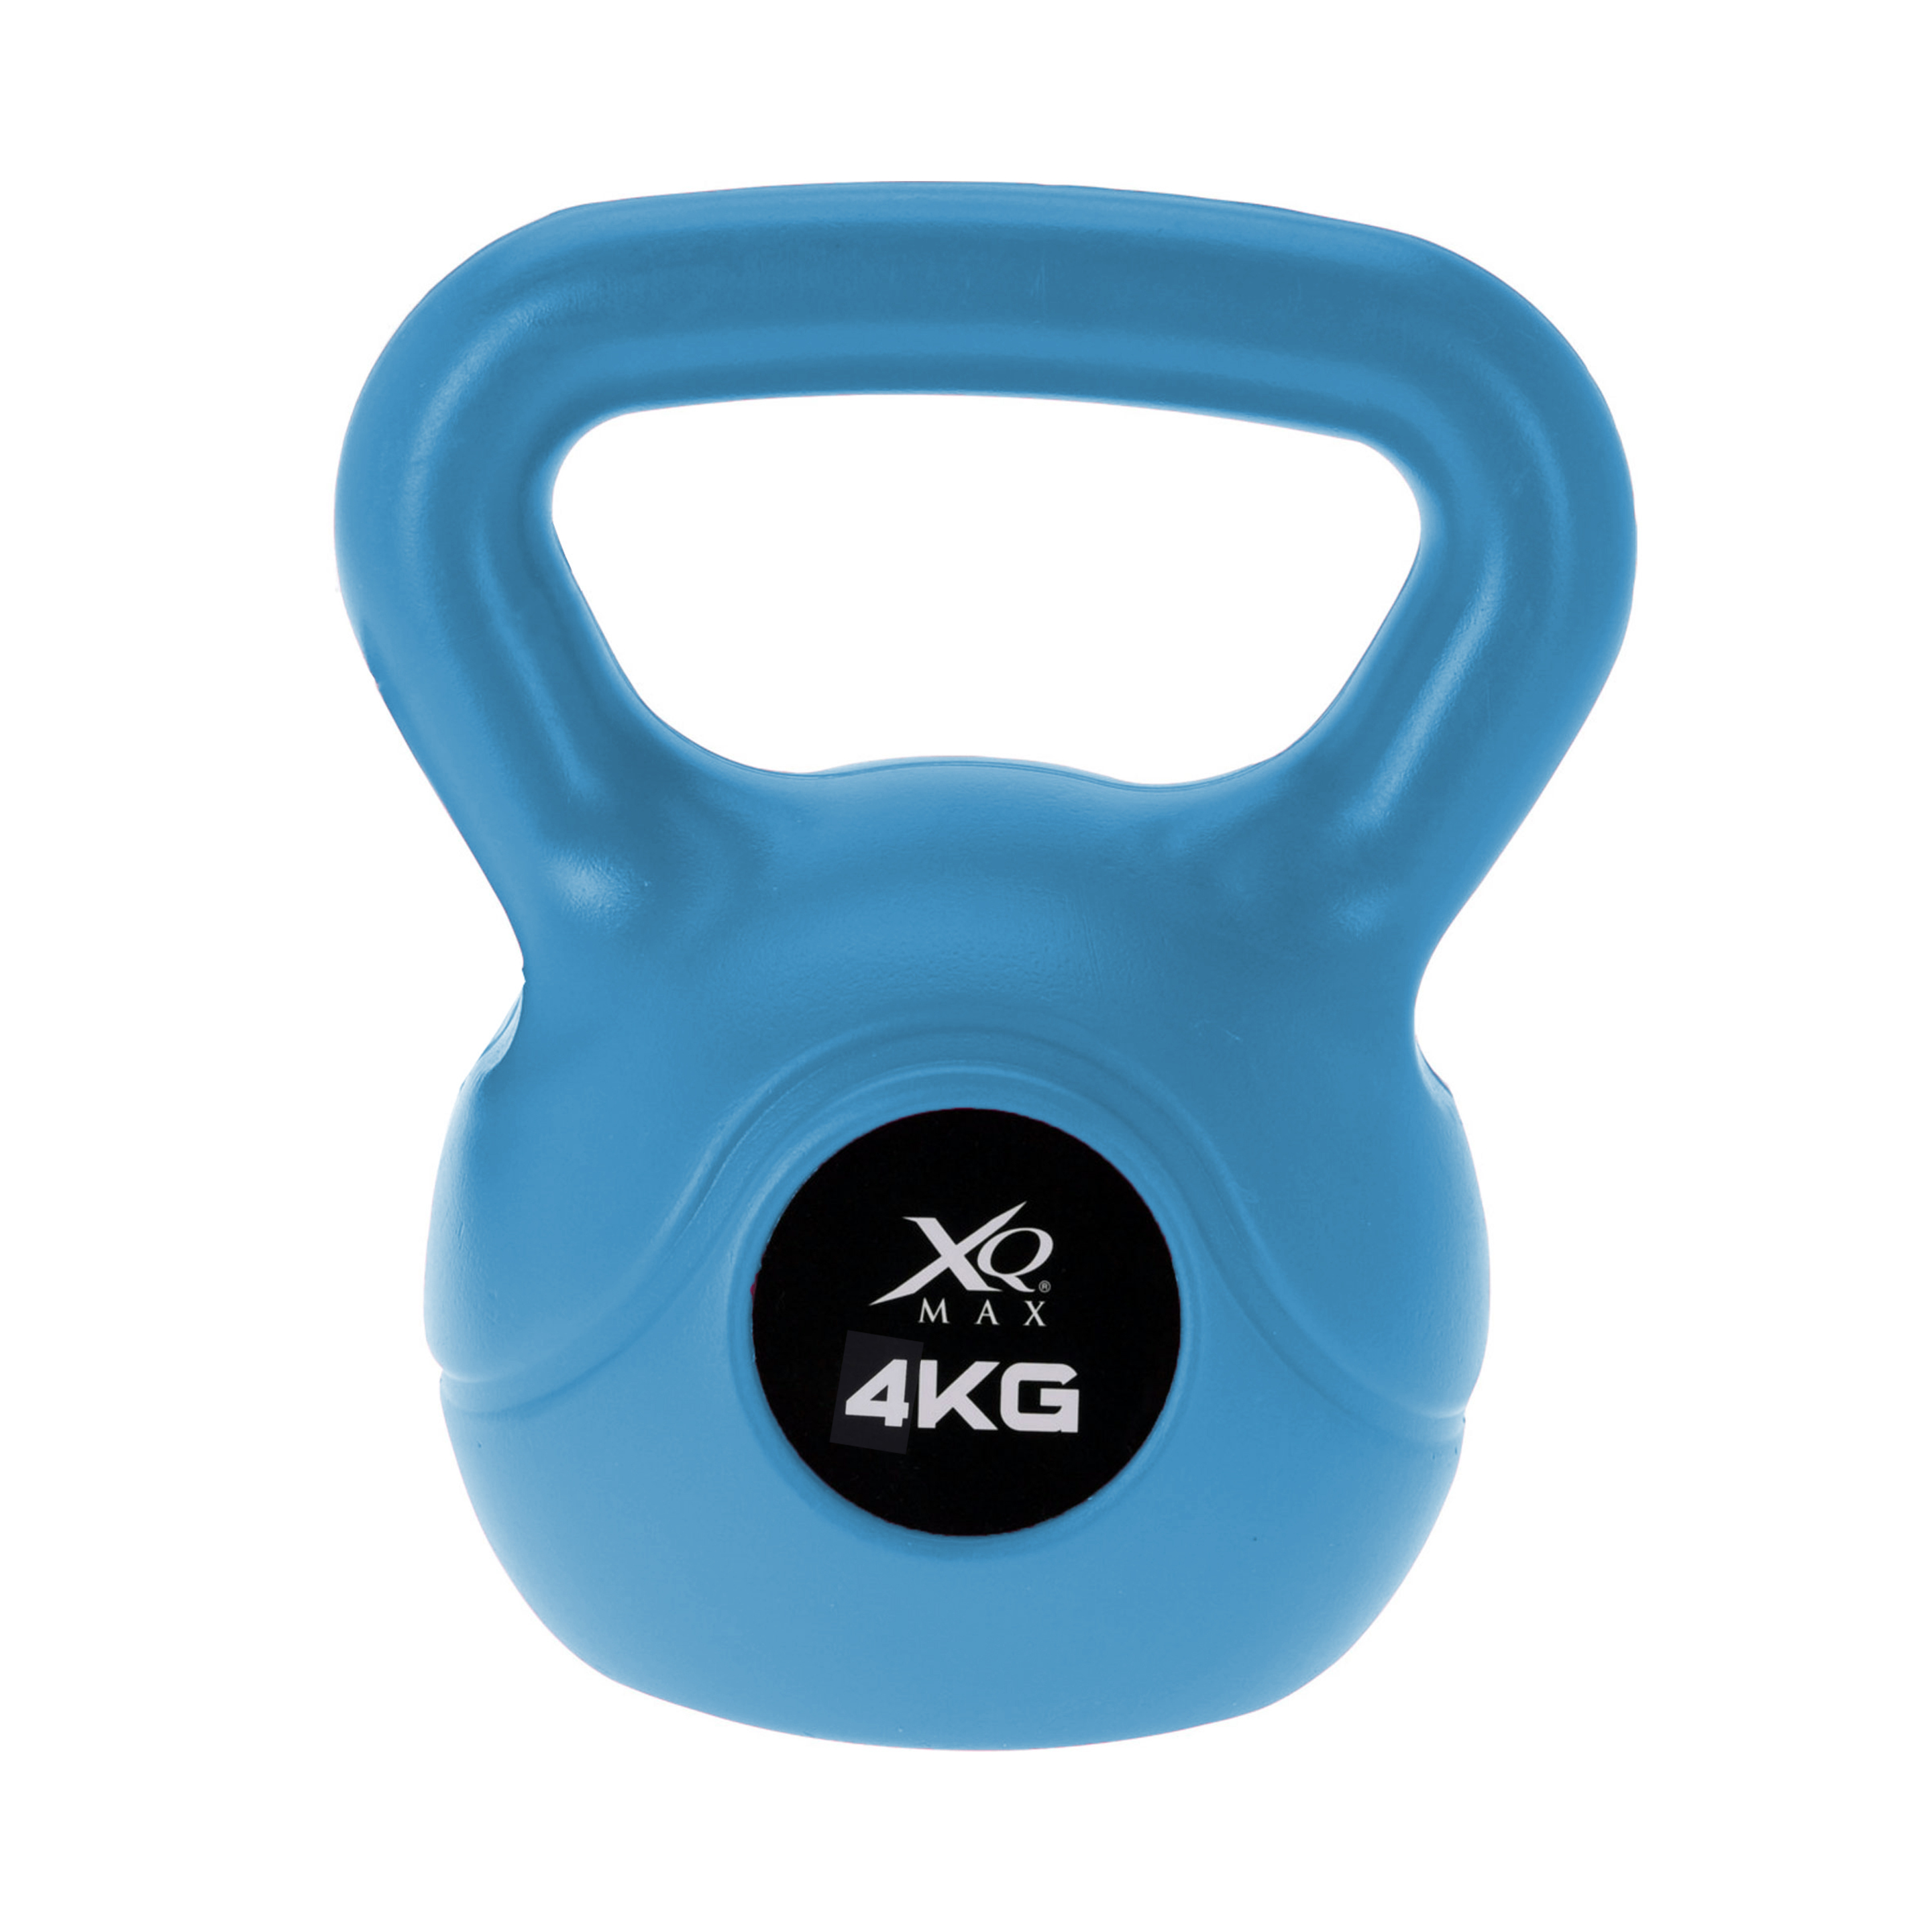 Kettlebell 4kg Xq Max - Azul  MKP